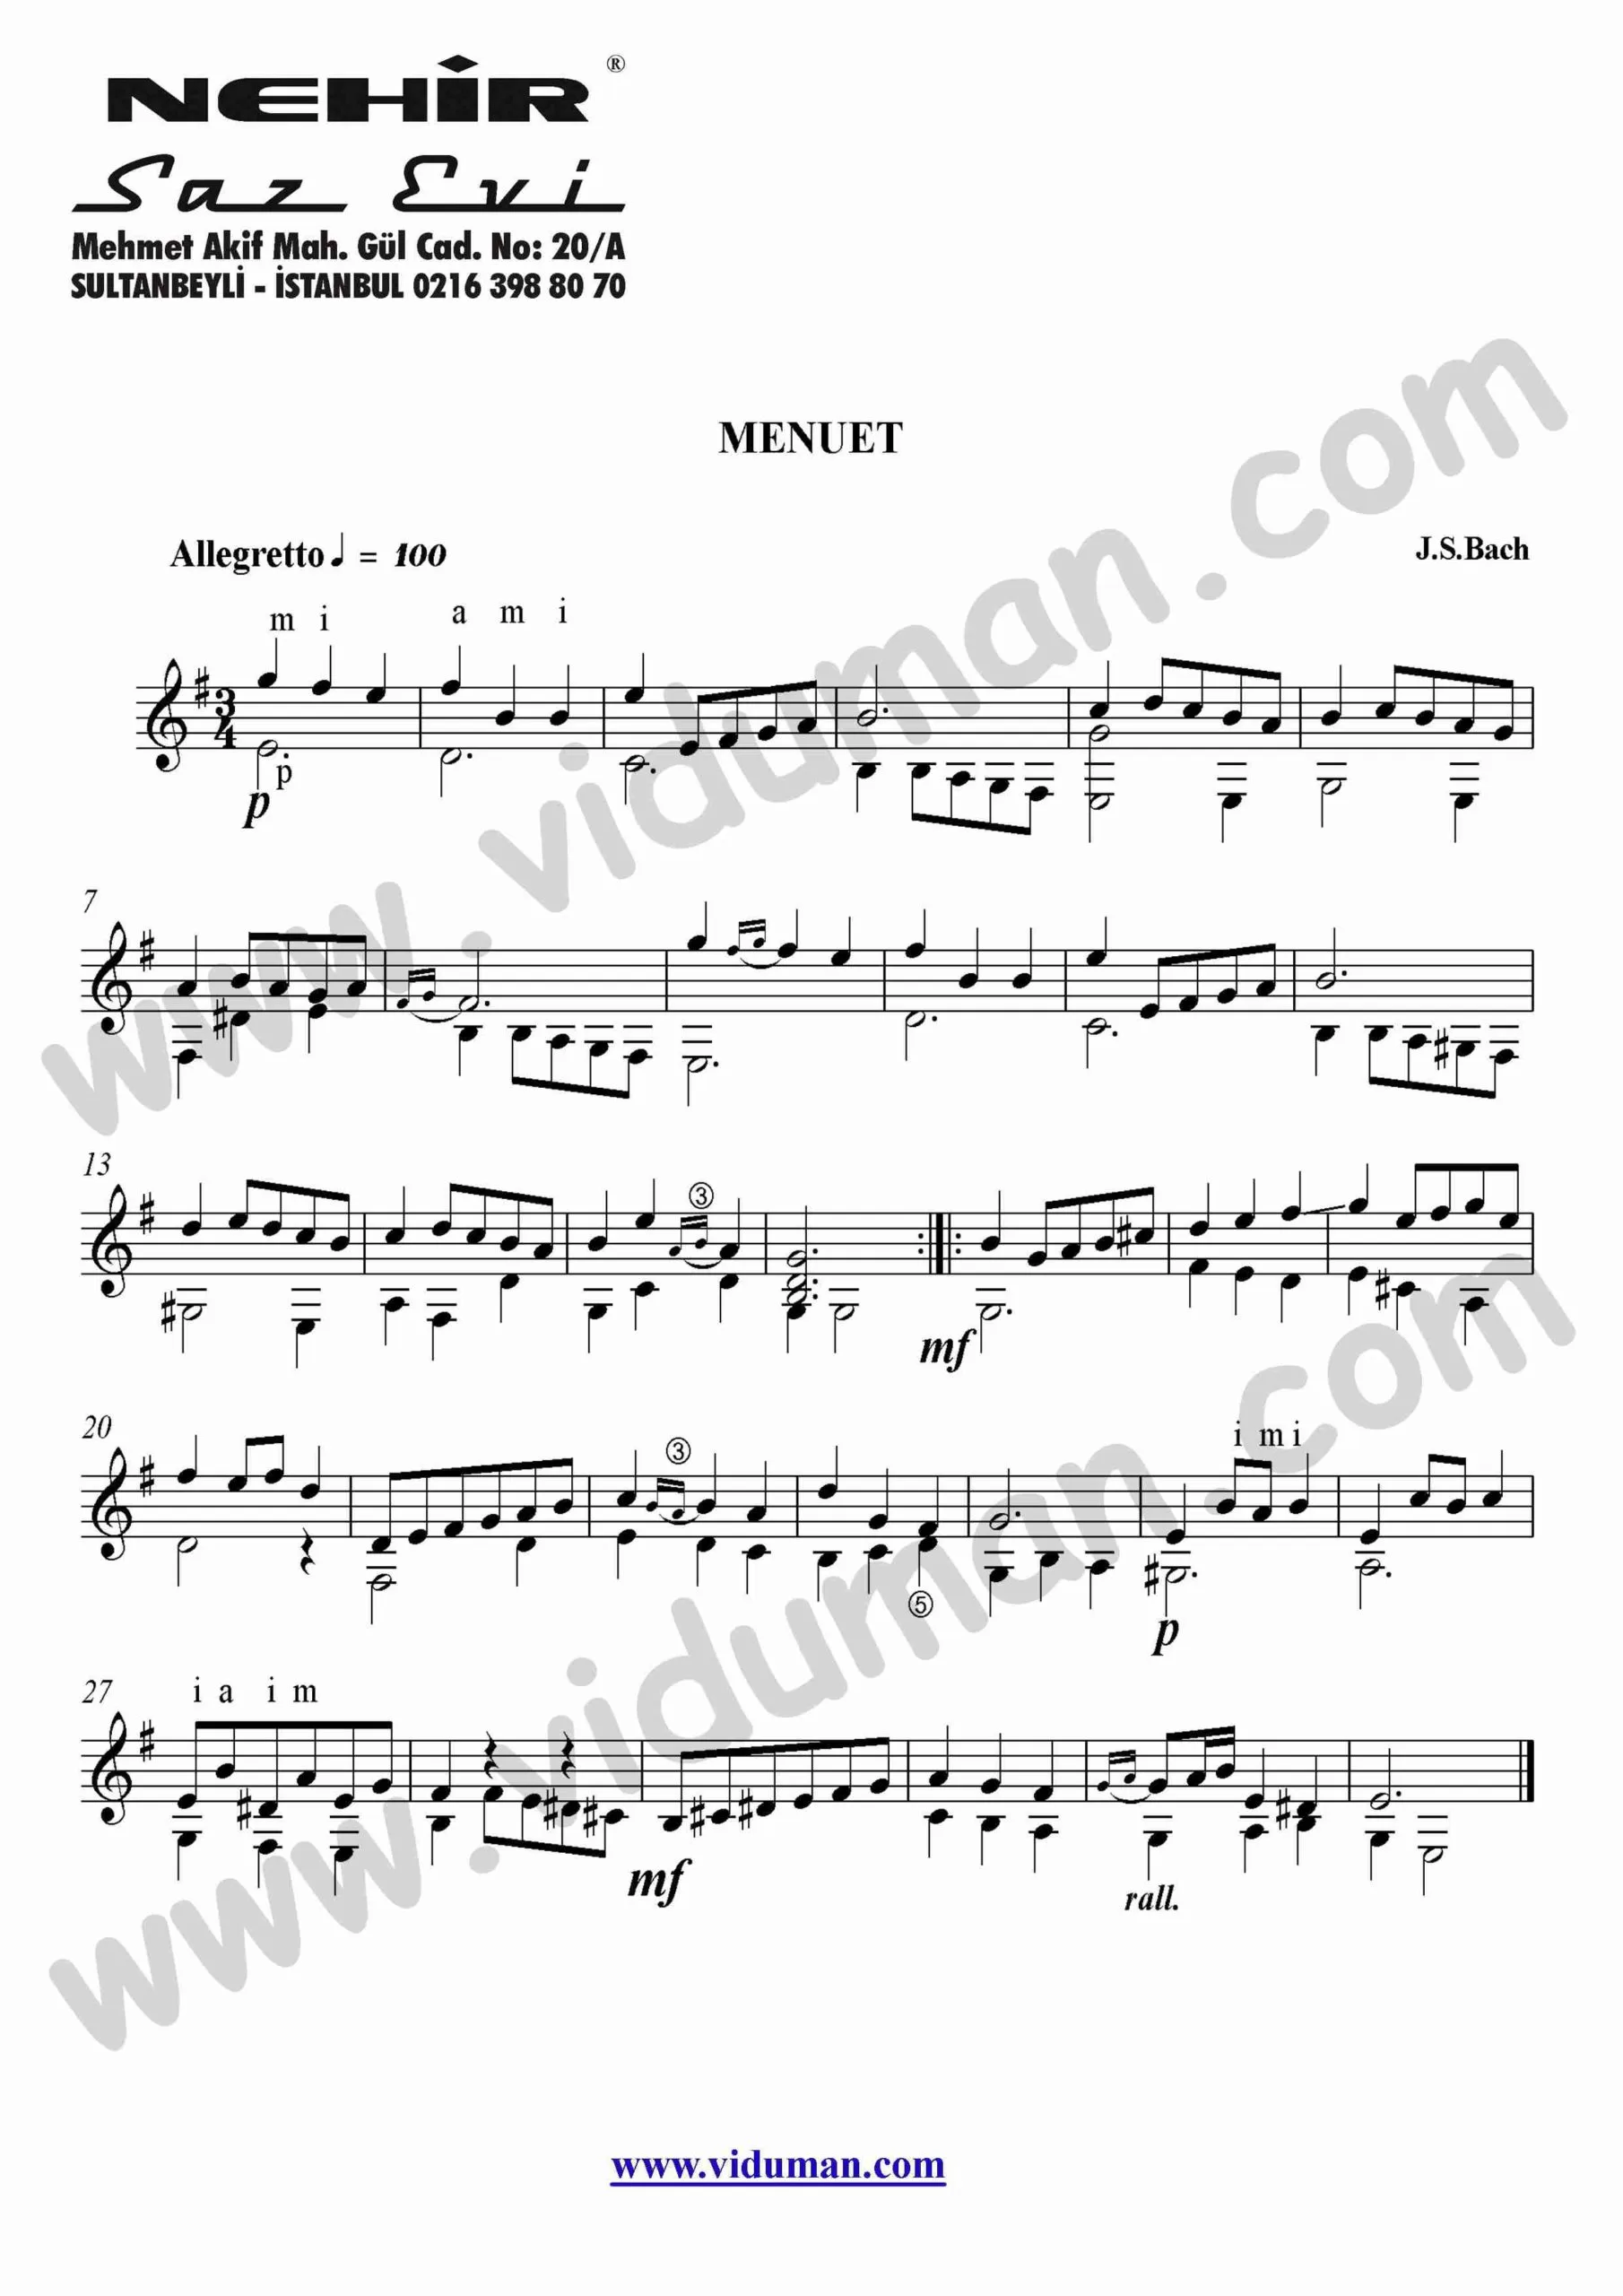 77- Menuet (J.S.Bach)